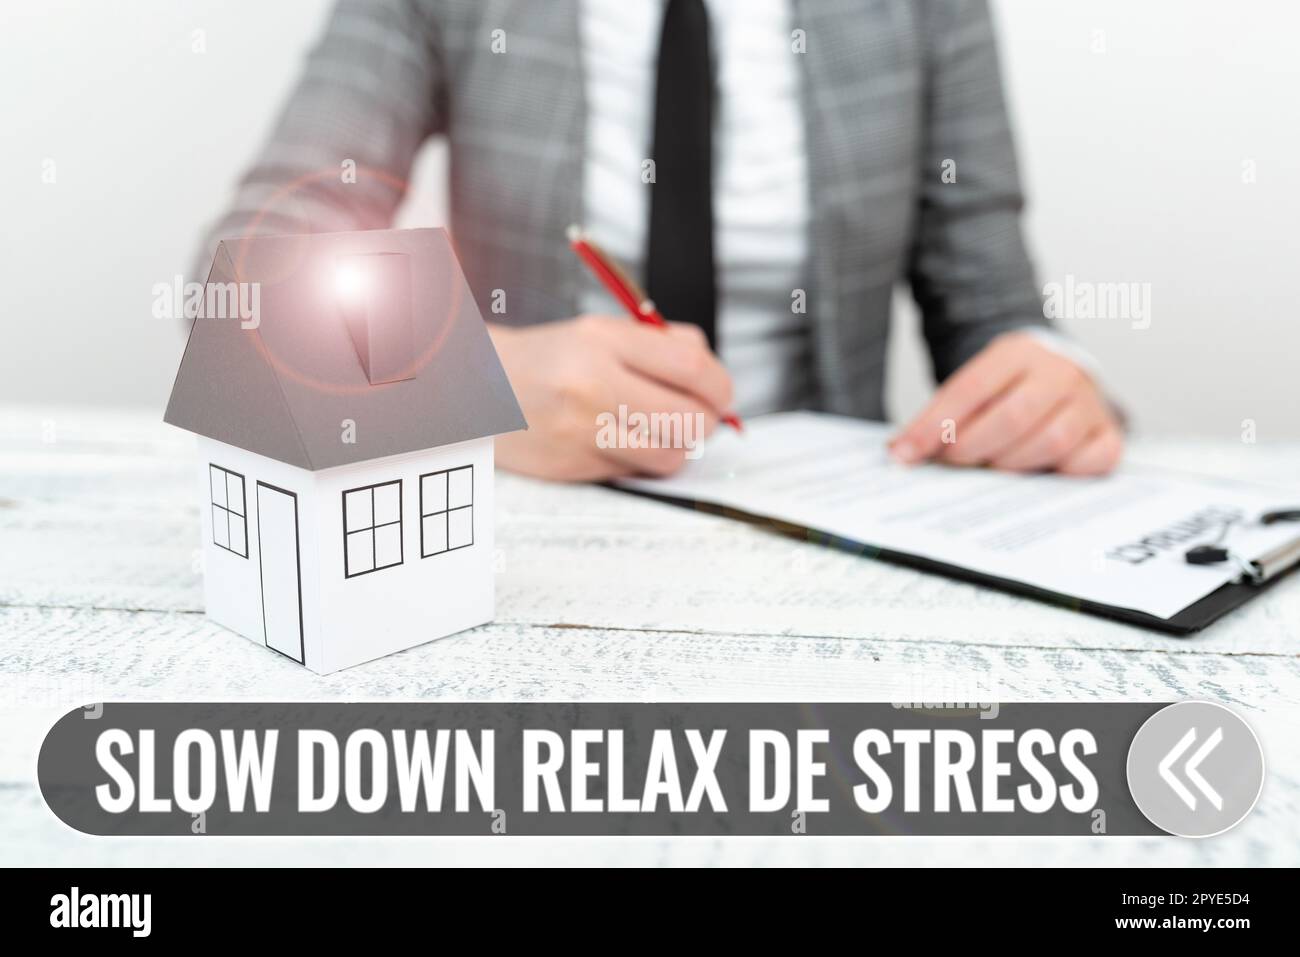 Handgeschriebener Text langsamer Relax De Stress. Wort für "Pause machen" Stresspegel reduzieren Ruhe bewahren Stockfoto